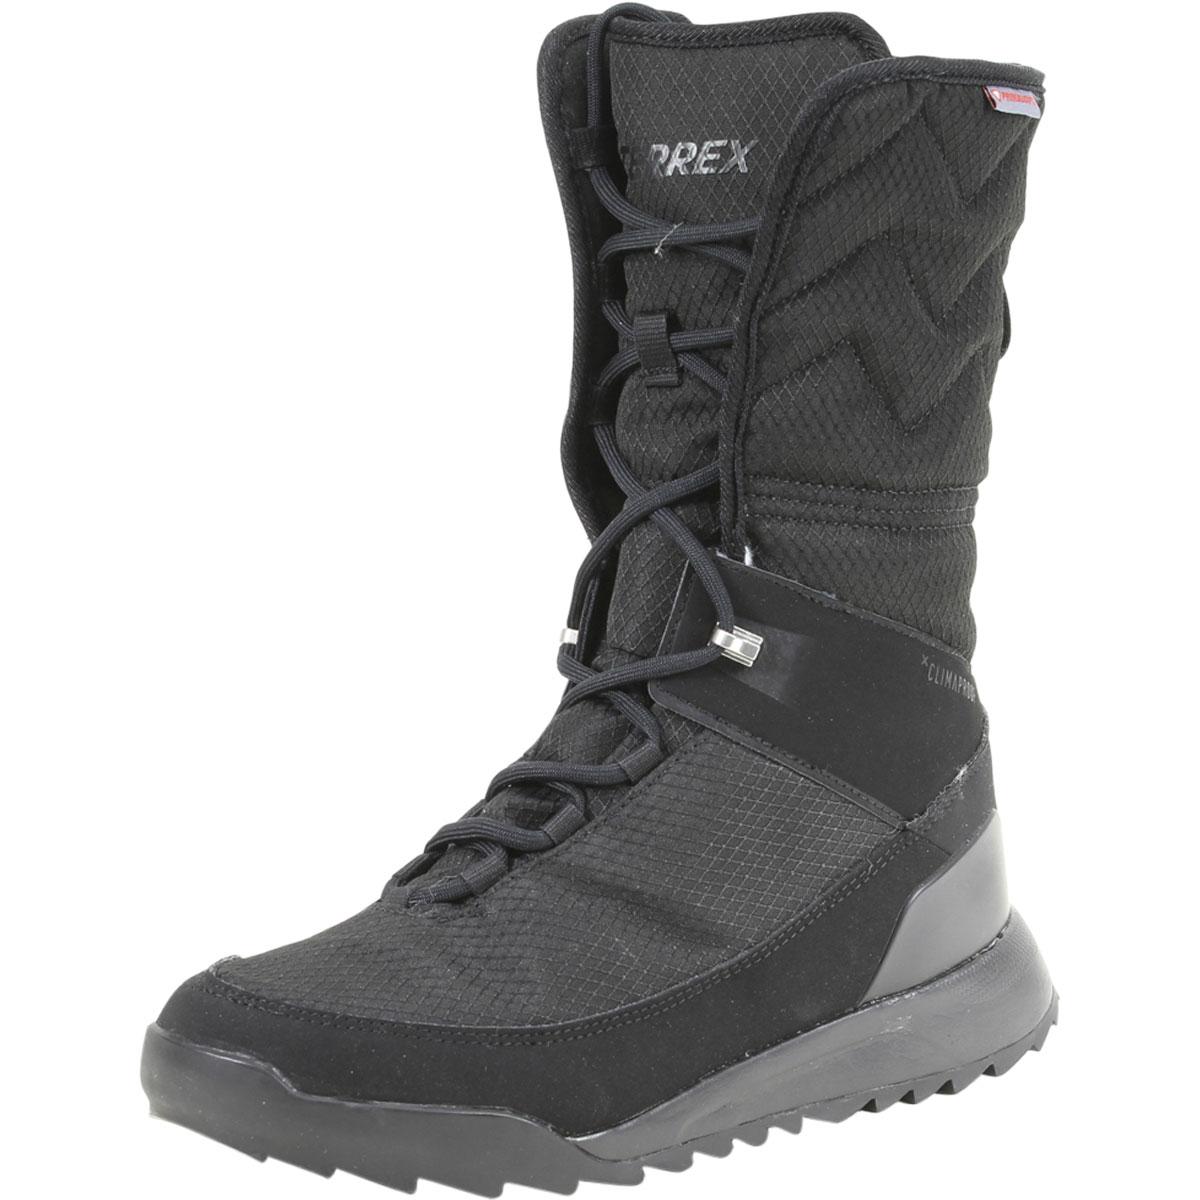 Adidas Women's Terrex Choleah High Climaproof Winter Boots Shoes - Black - 7 B(M) US